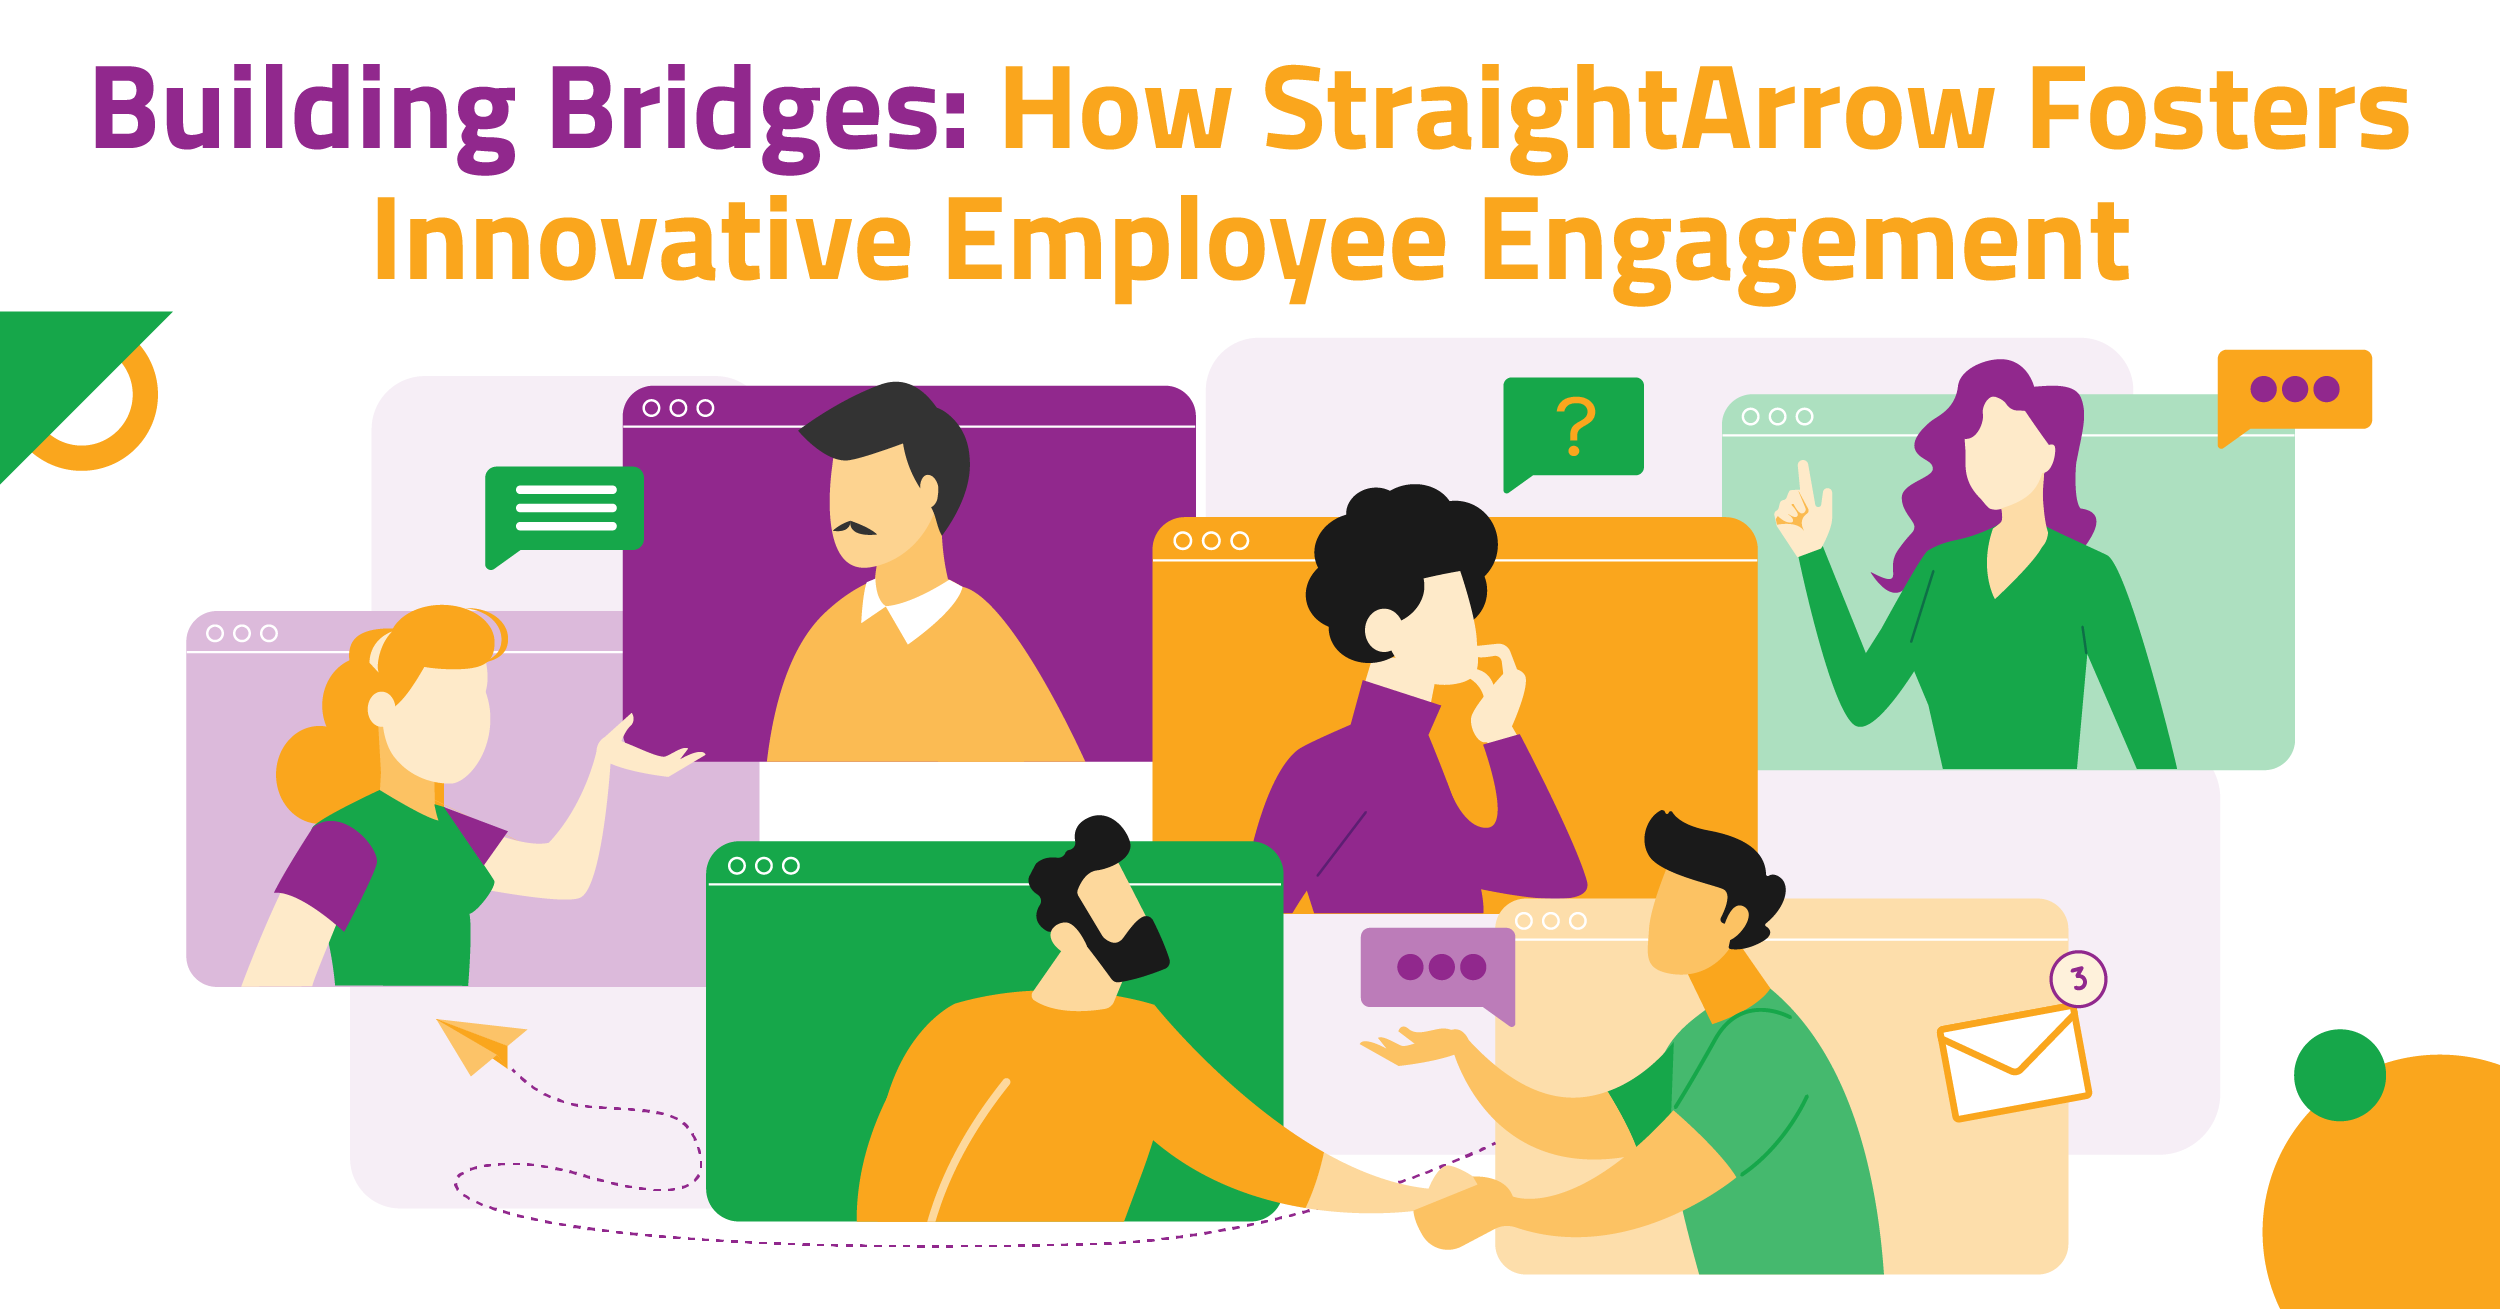 Building Bridges: How StraightArrow Fosters Innovative Employee Engagement